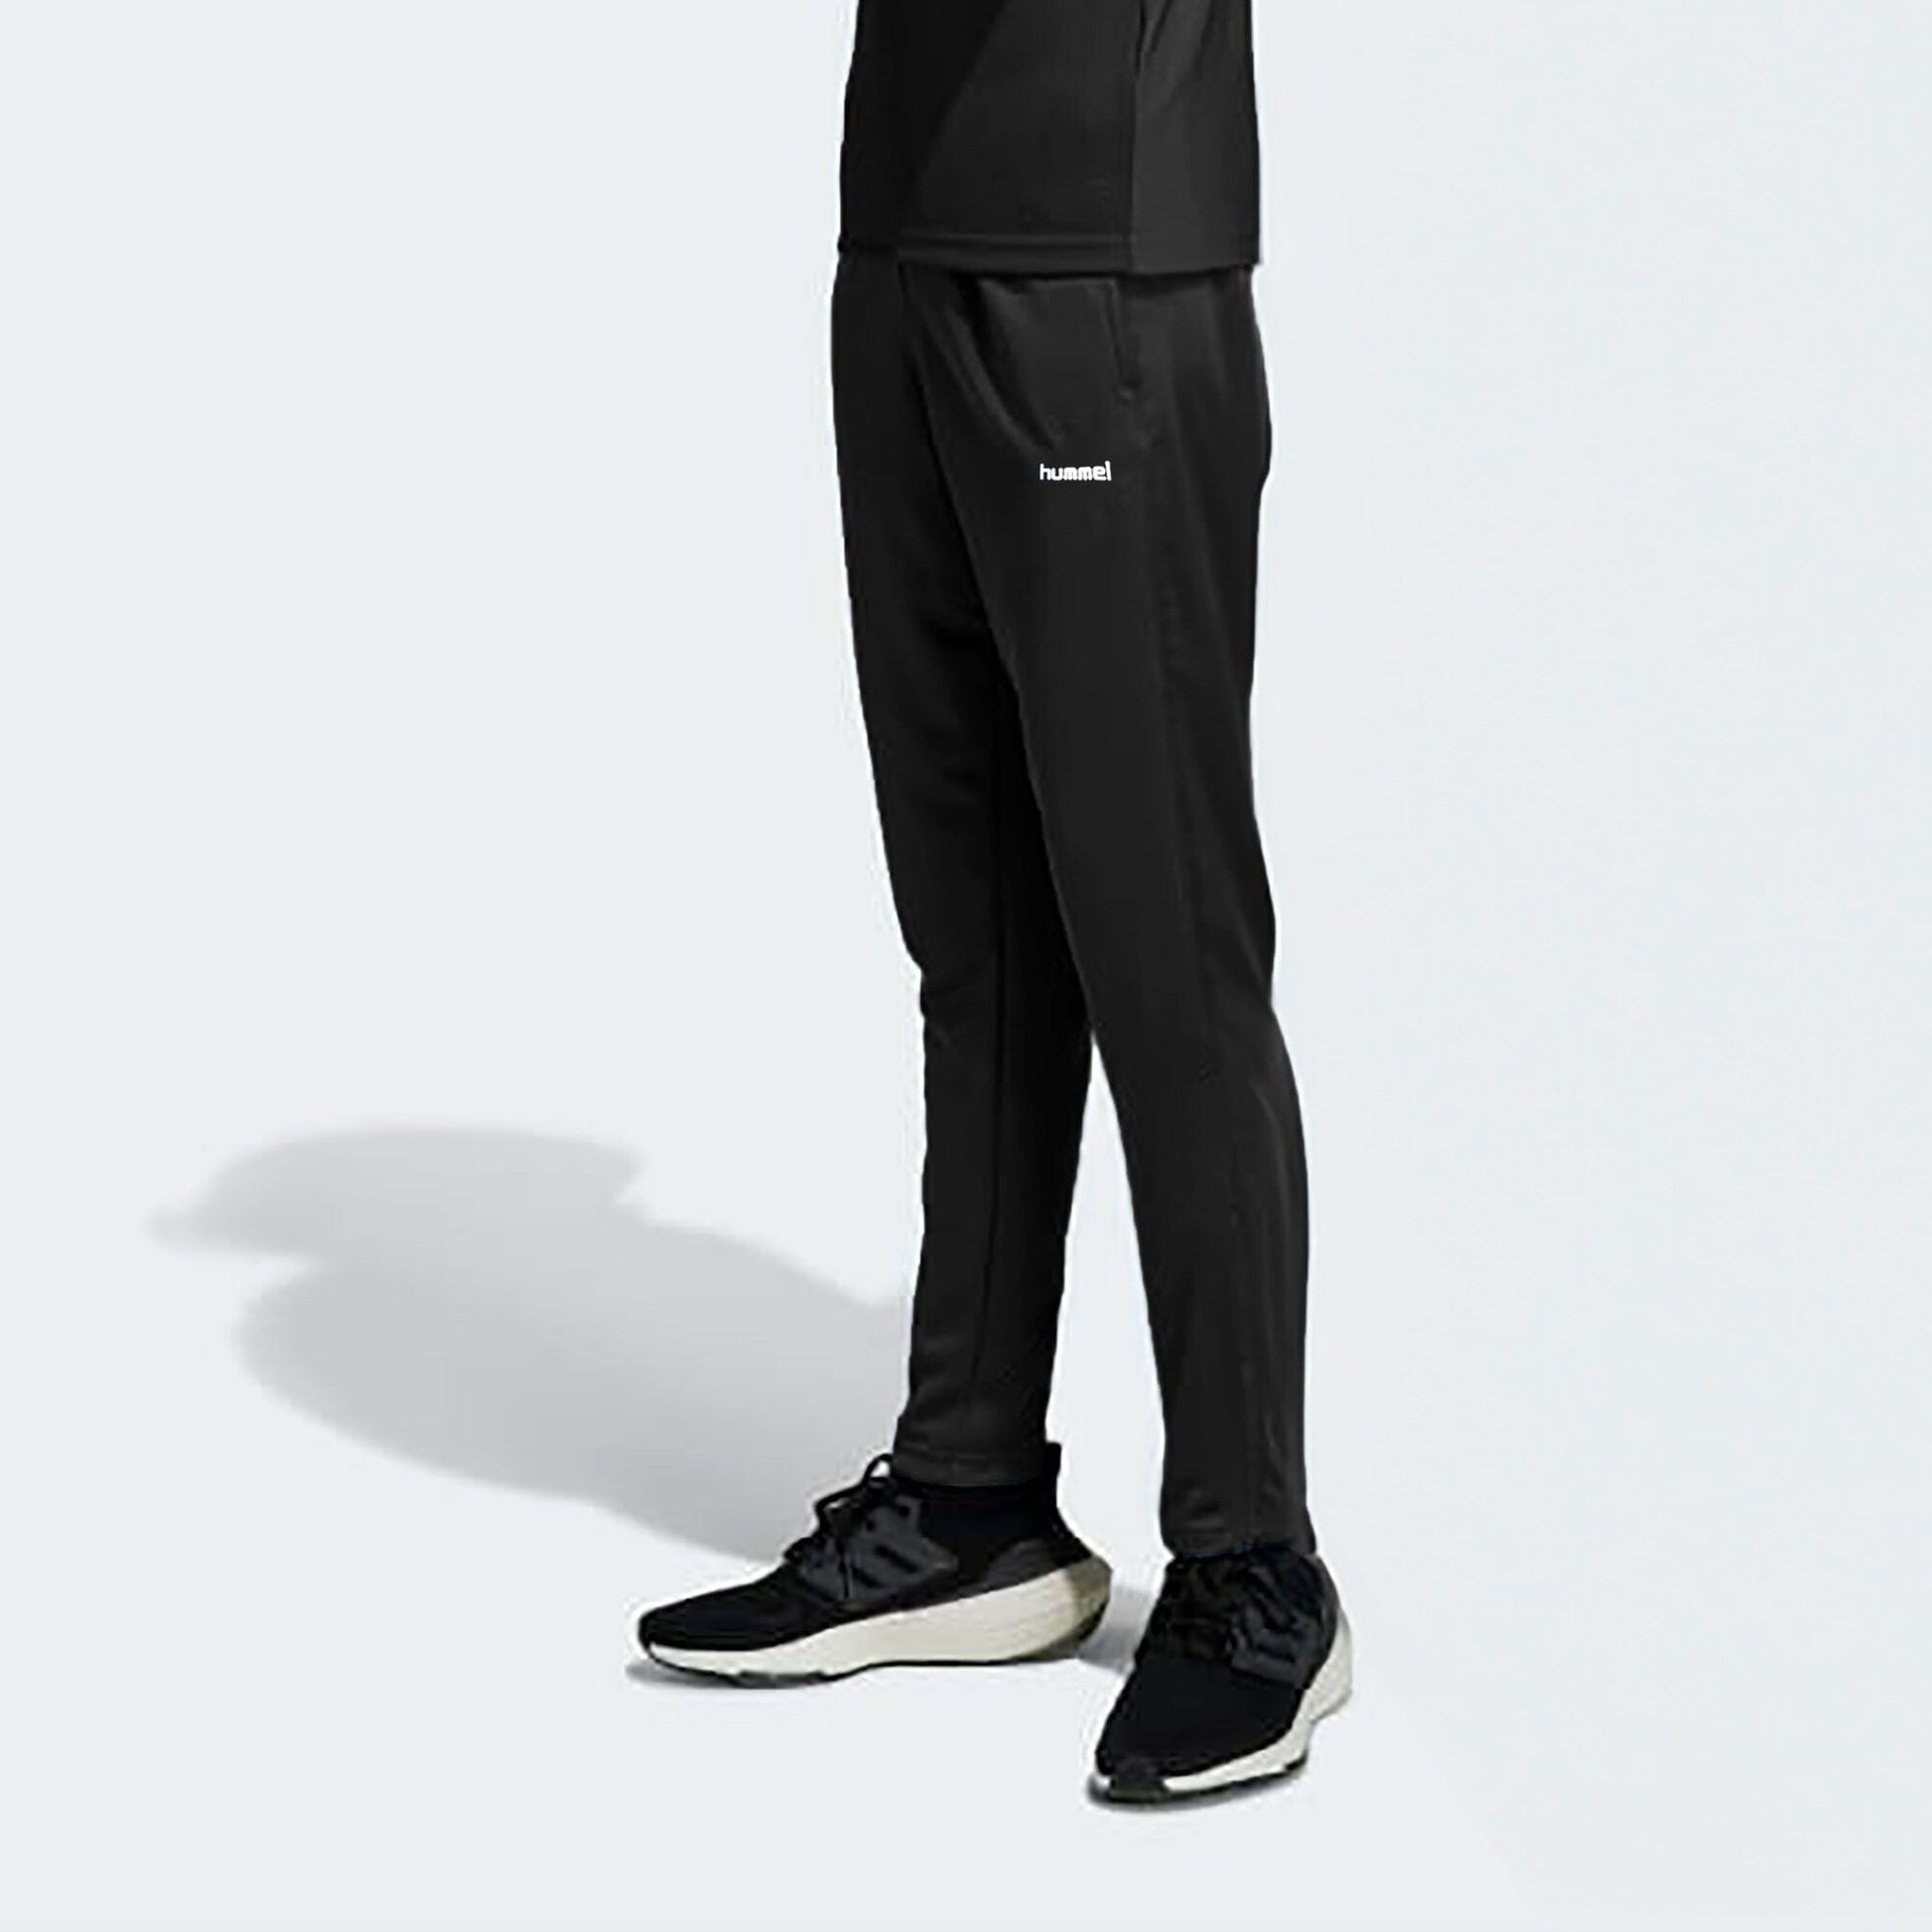 Hummel Boy's Back Arrow Style Activewear Trousers Boy's Trousers HAS Apparel Black 4 Years 